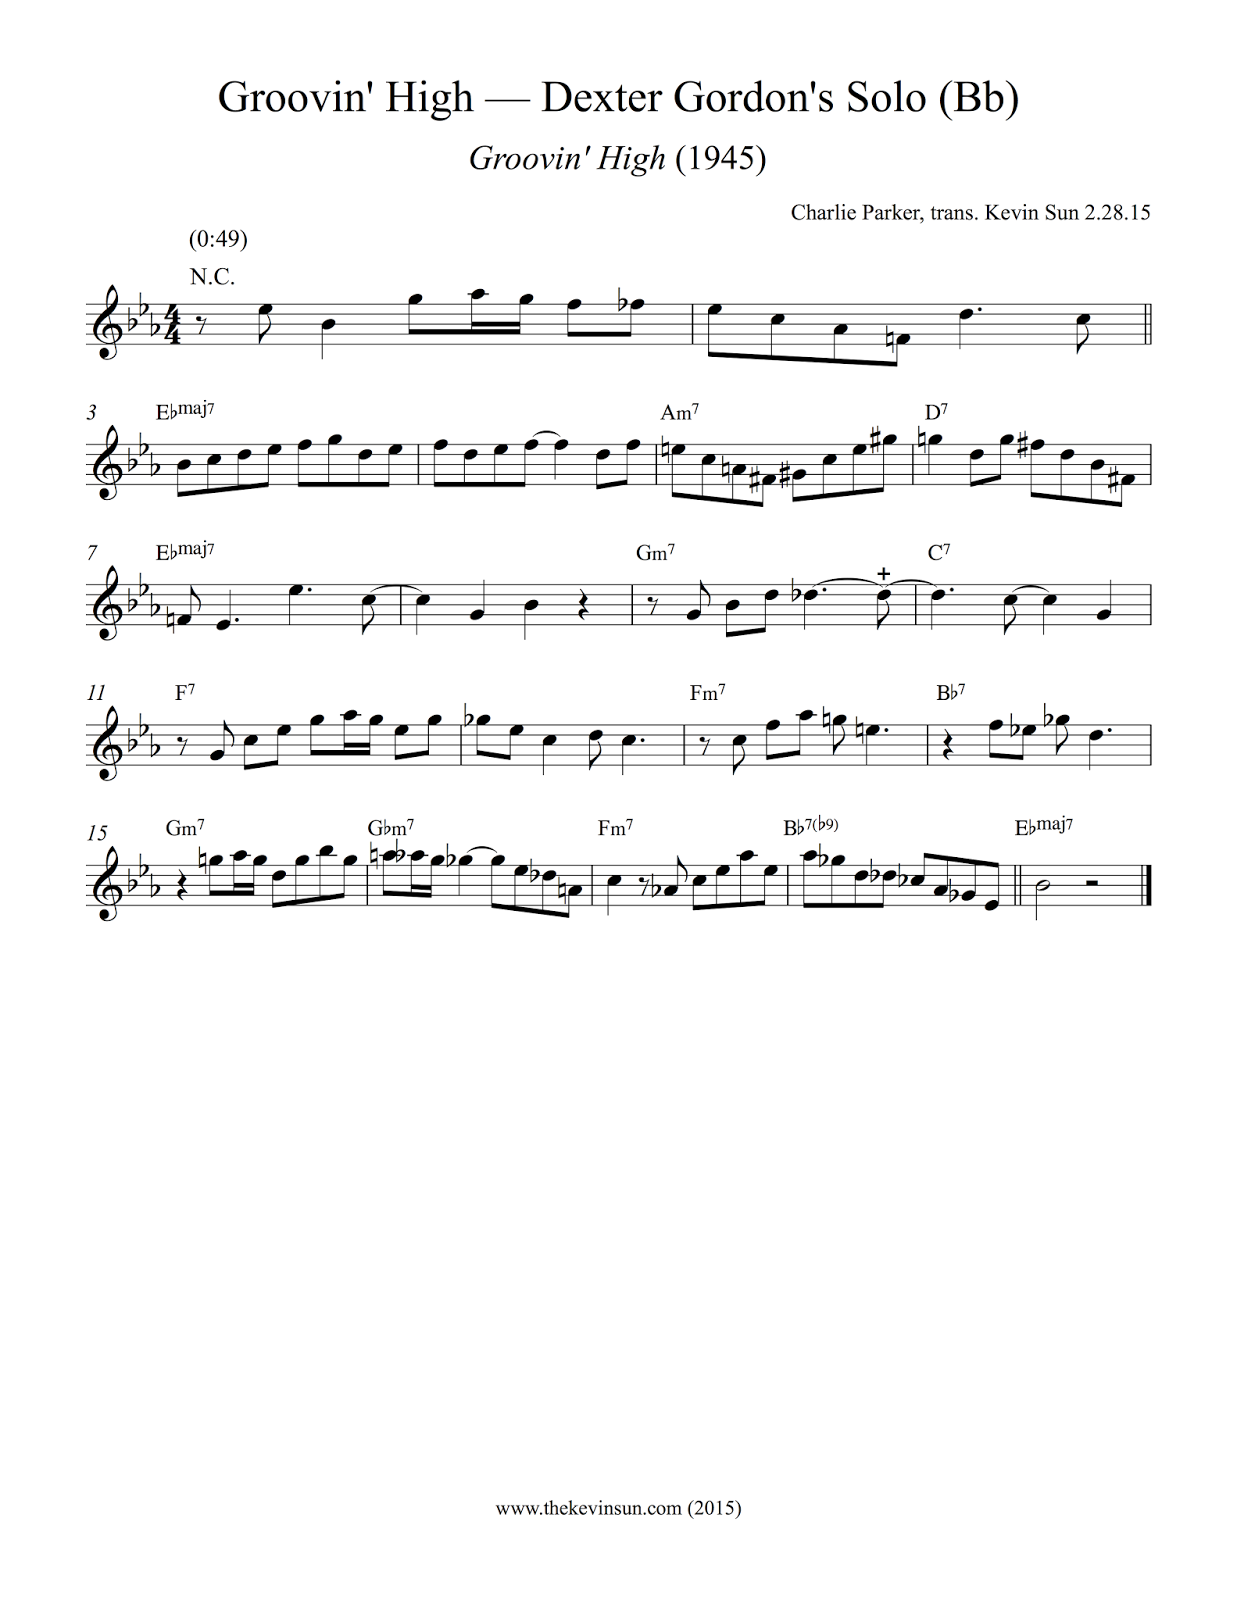 Dexter Gordon Jazz Saxophone Bebop Solo Transcription - "Groovin' High"